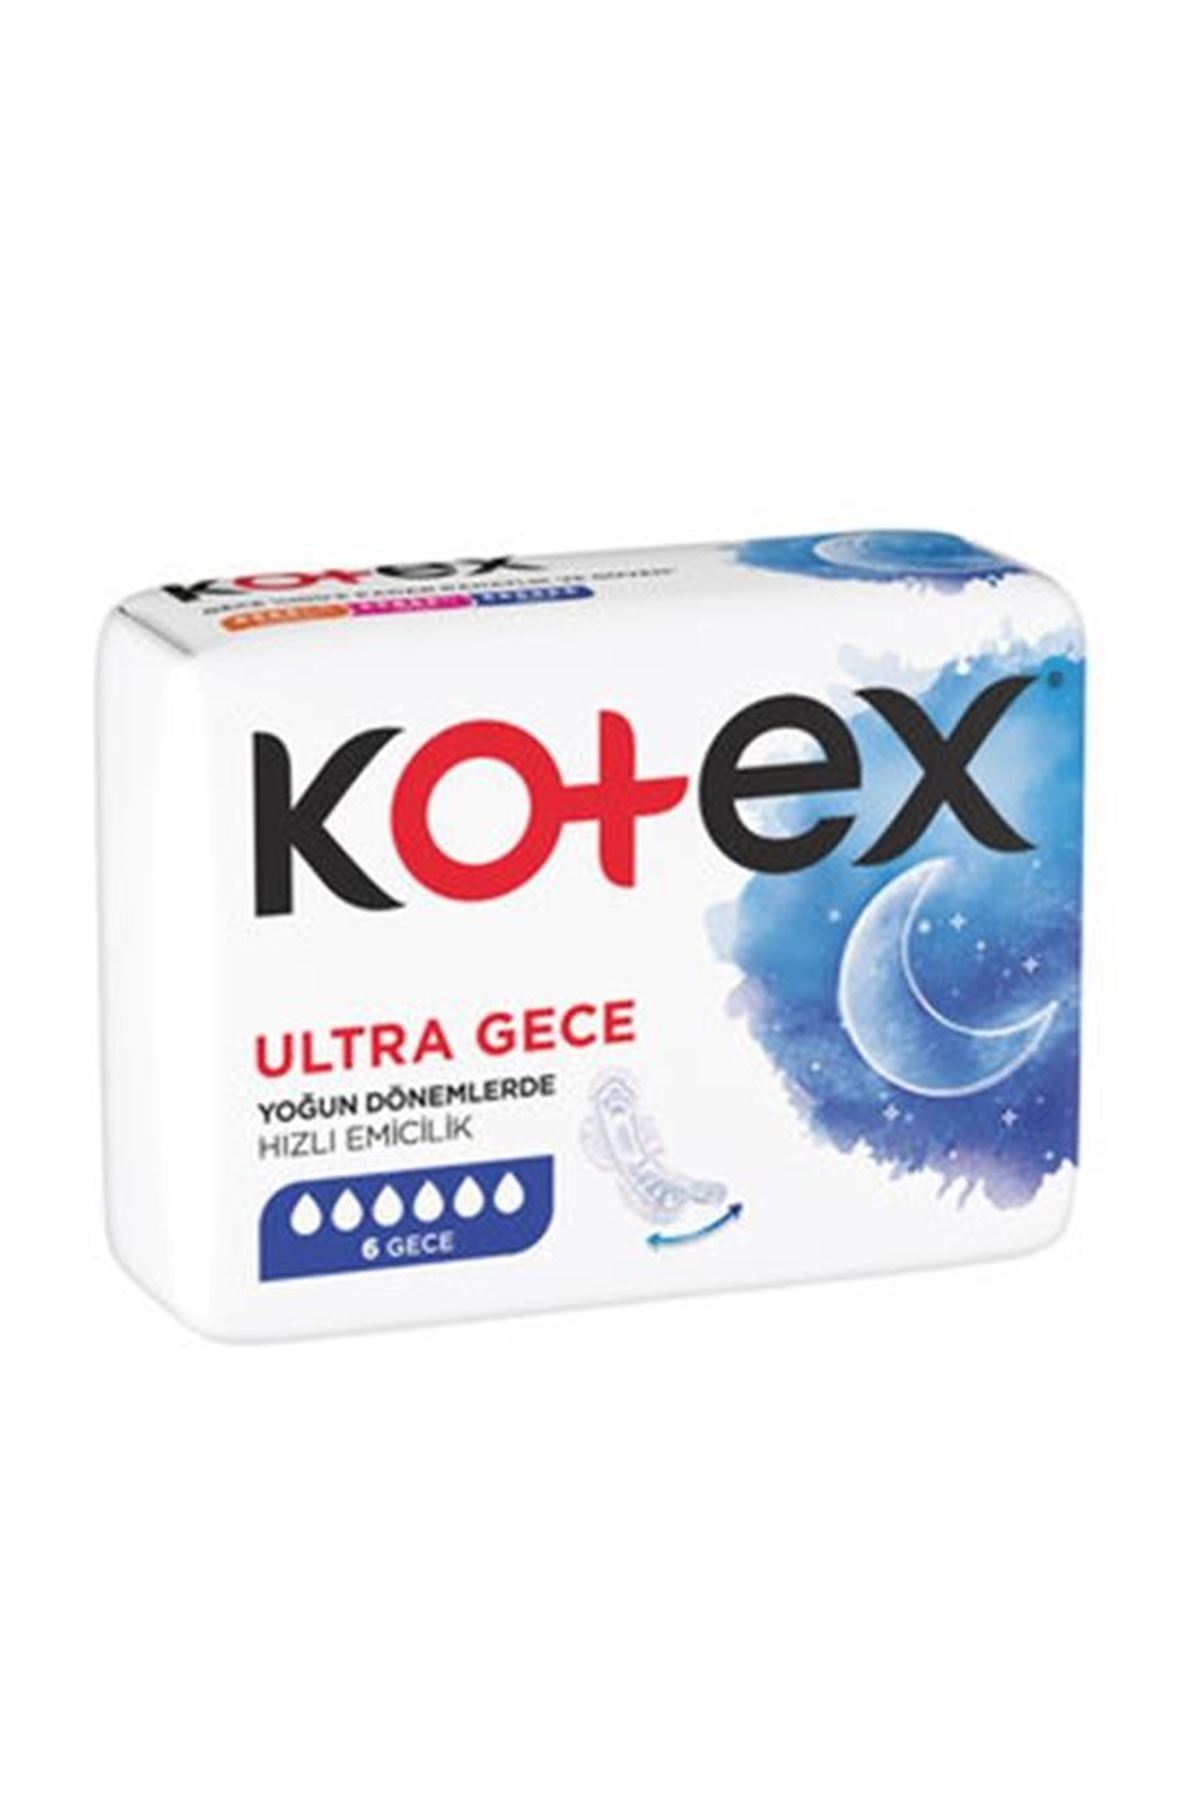 Kotex Ultra Gece Ped 6'lı 198513